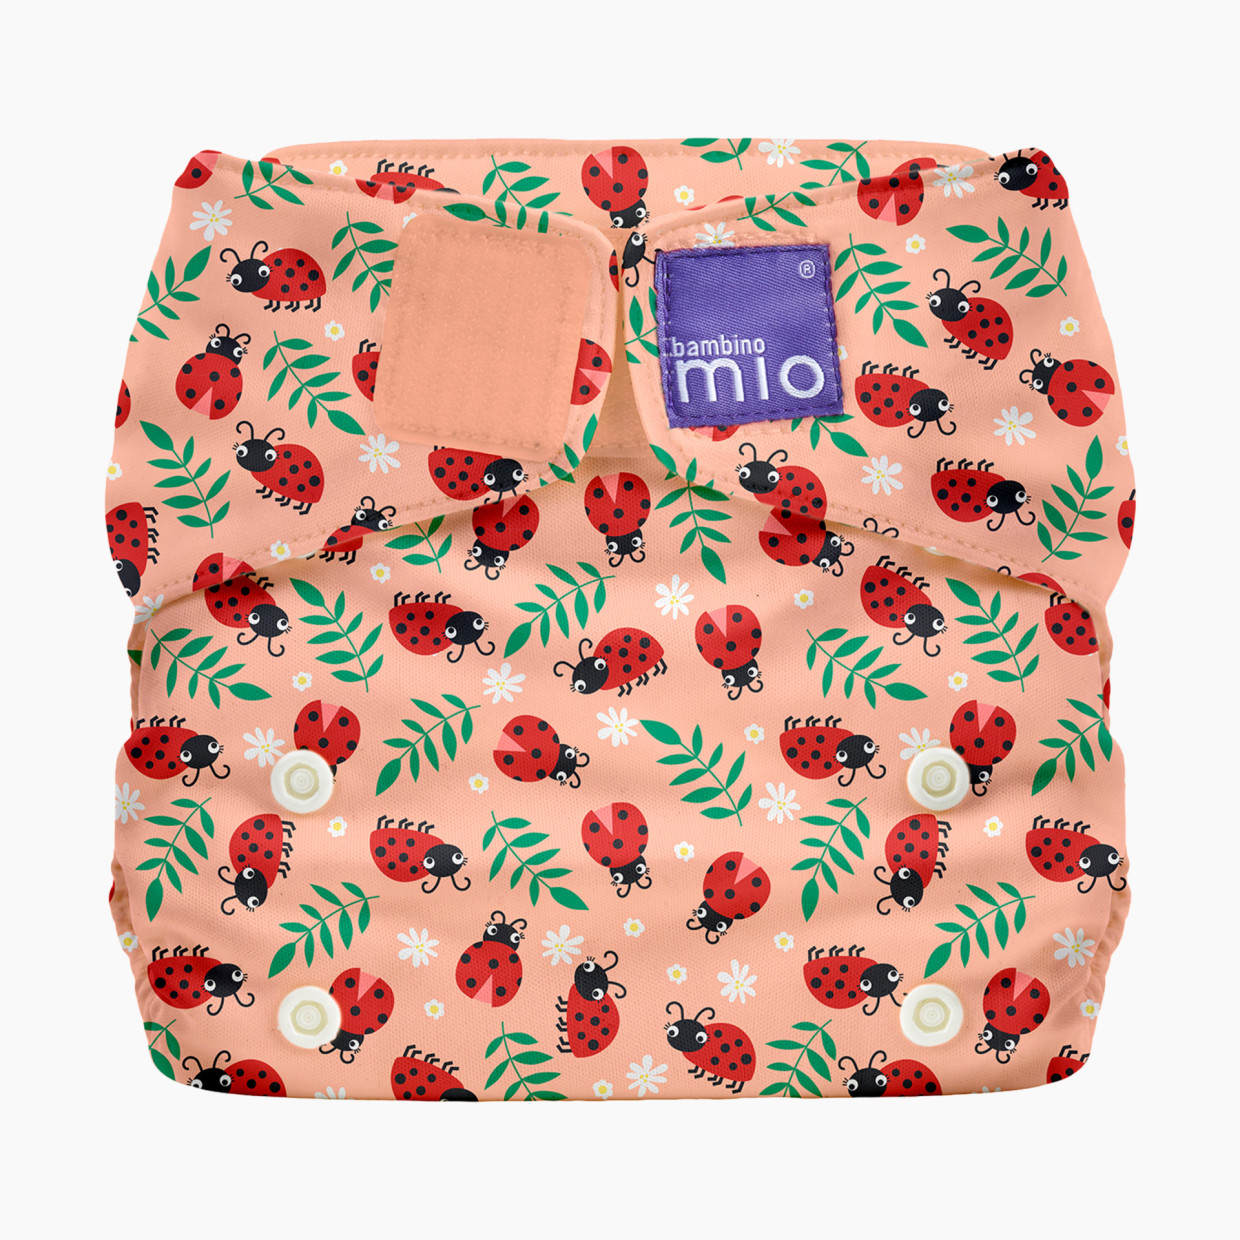 Bambino Mio Miosolo Classic Cloth Diaper - Loveable Ladybug, One Size (8-35 Lbs).